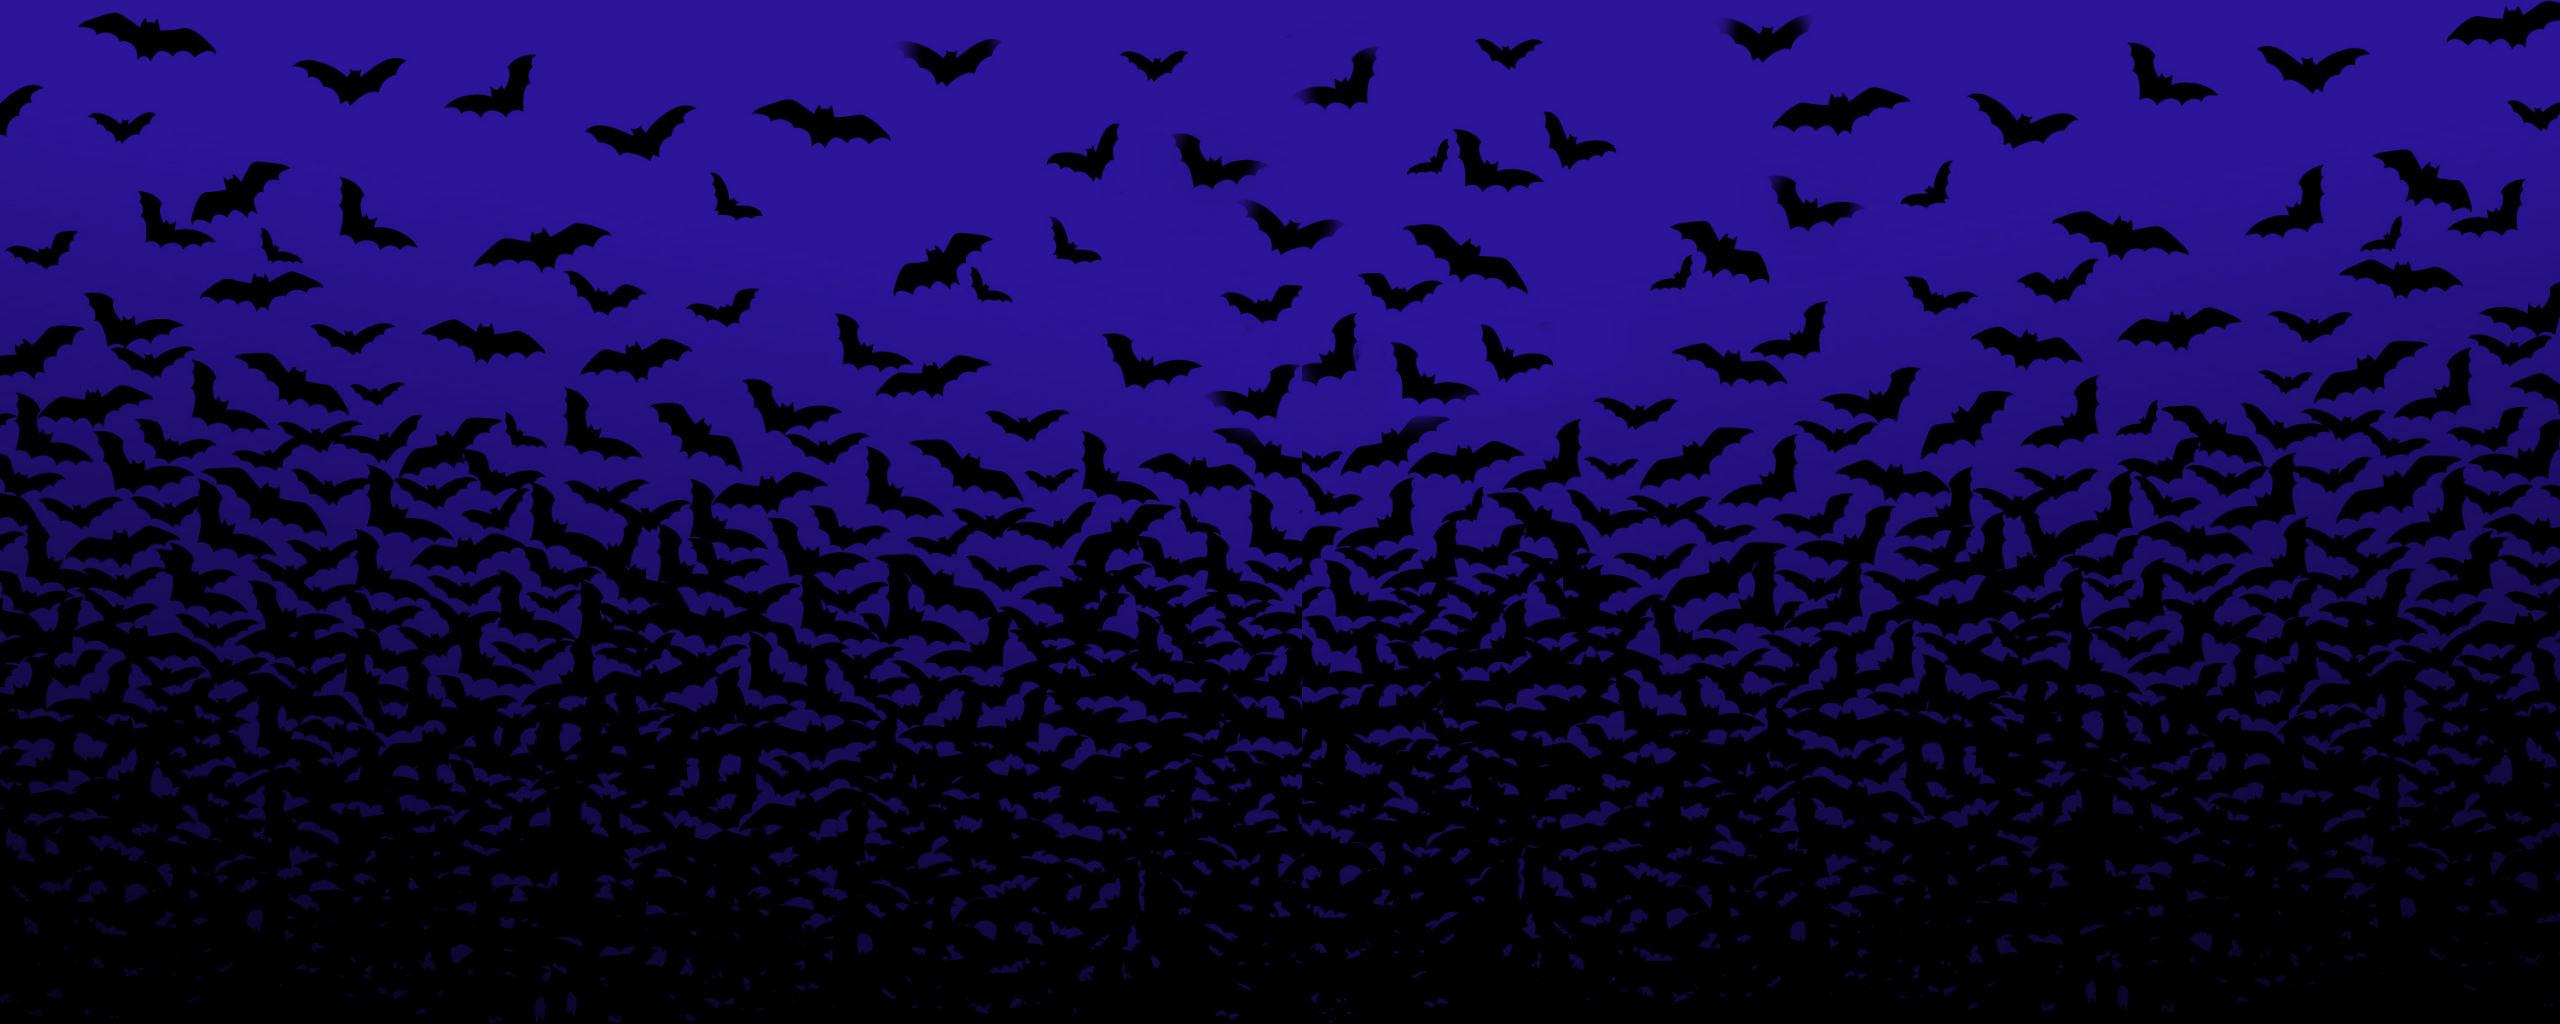 Bat Background. Bat Wallpaper